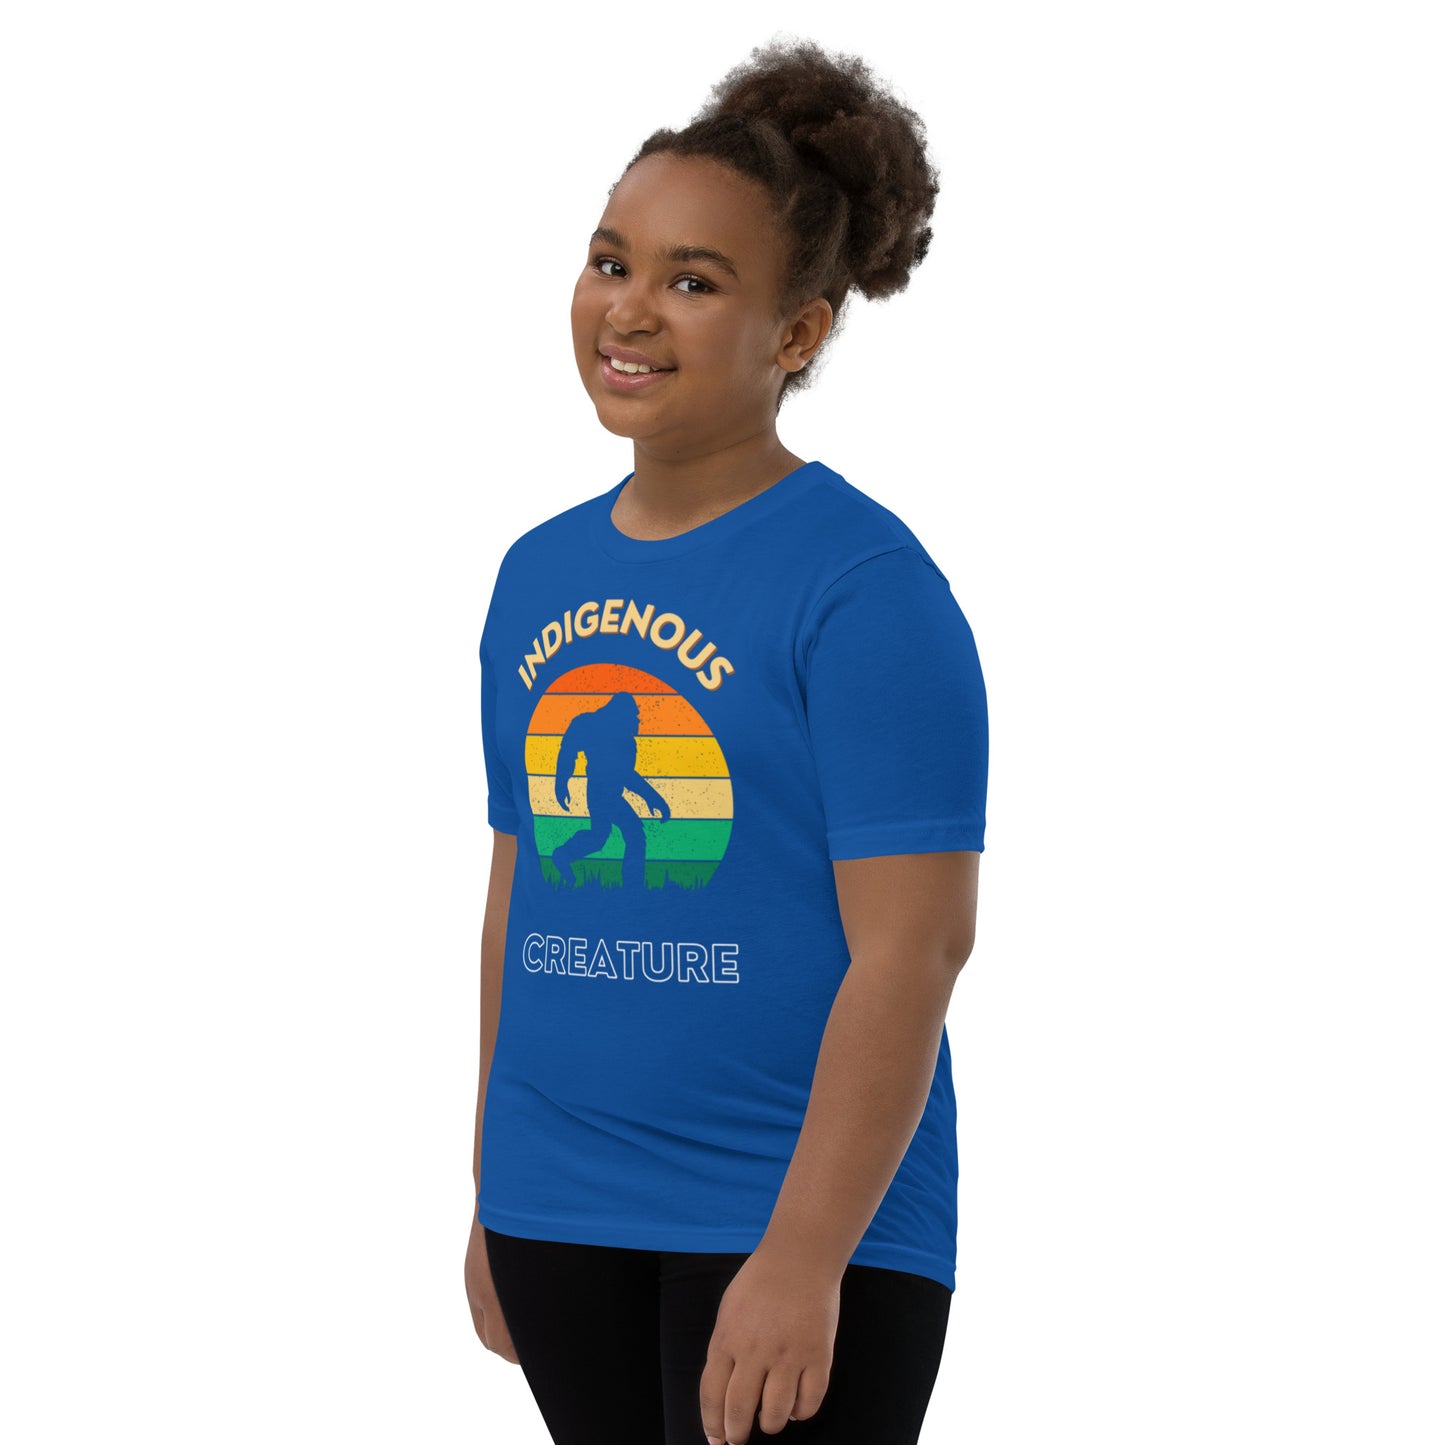 Indigenous Creature unisex Youth T-Shirt